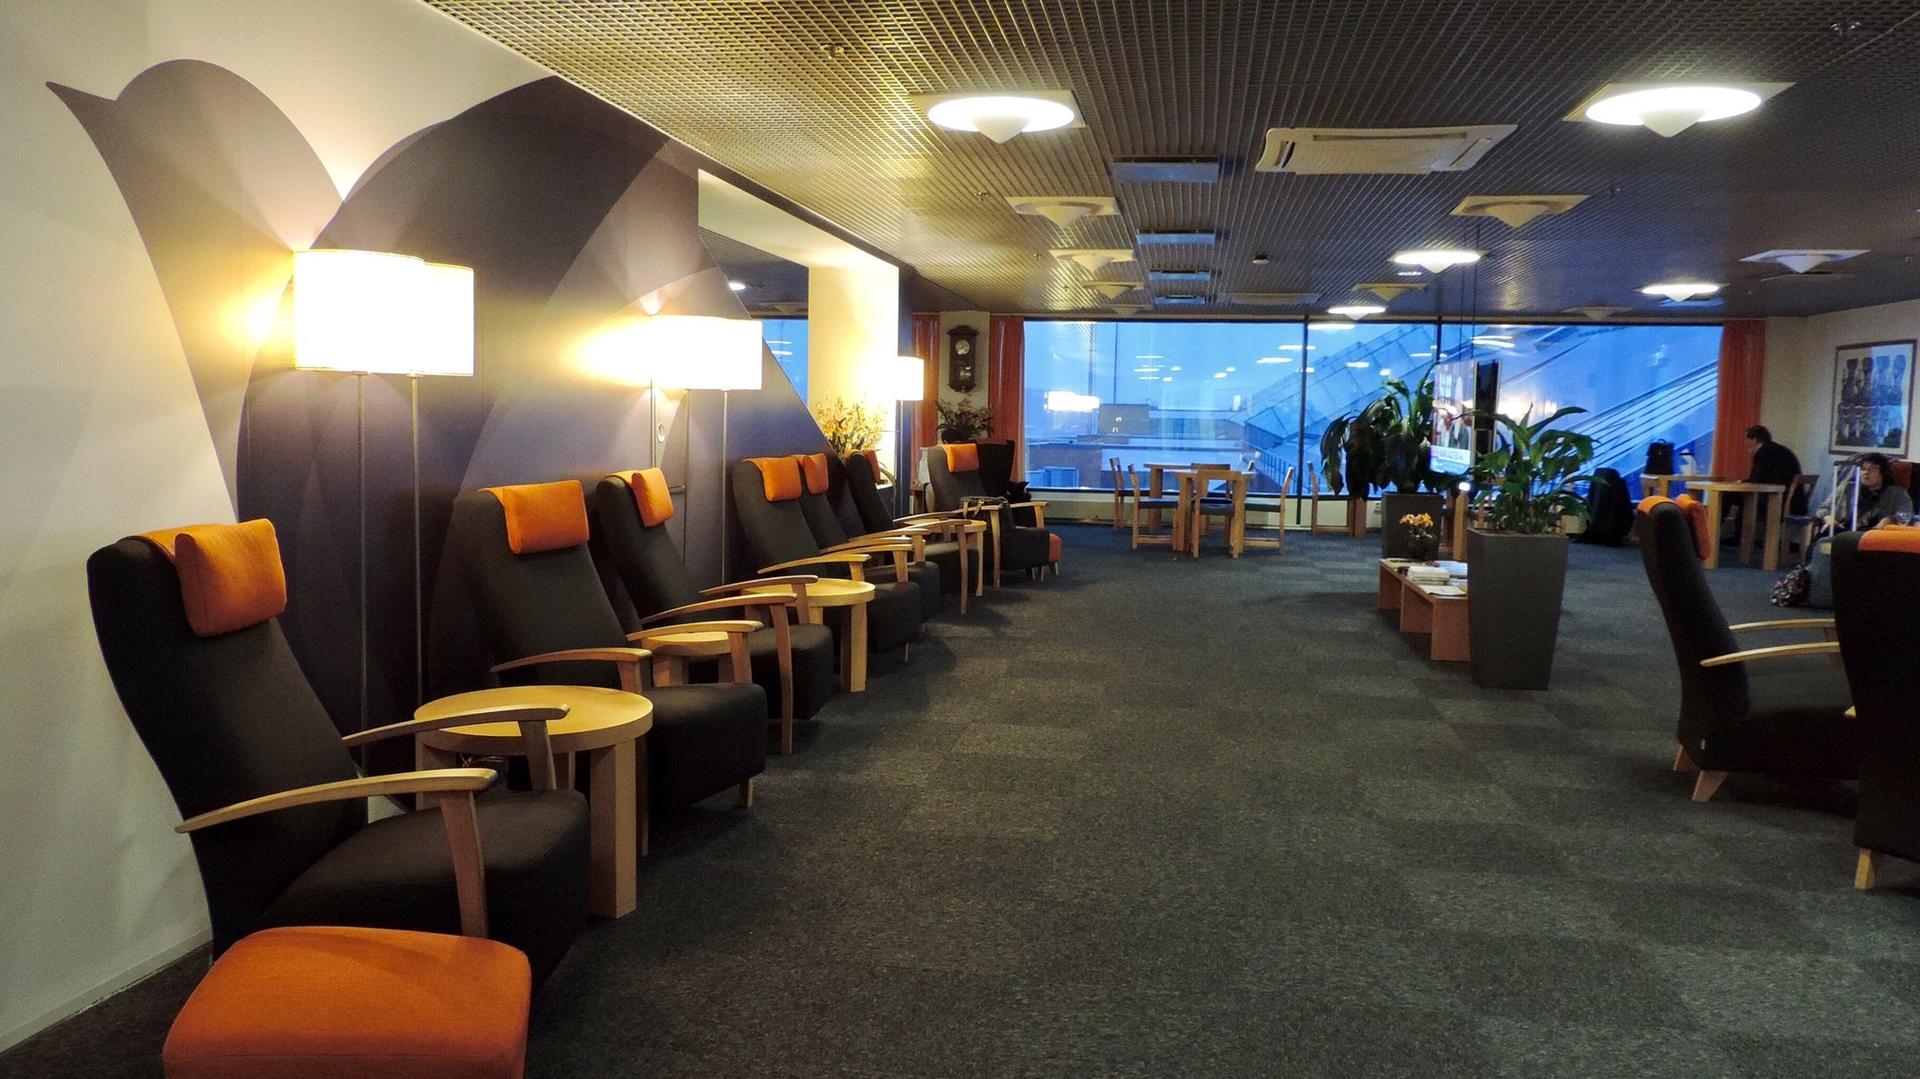 Tallinn Airport LHV Lounge image 19 of 20